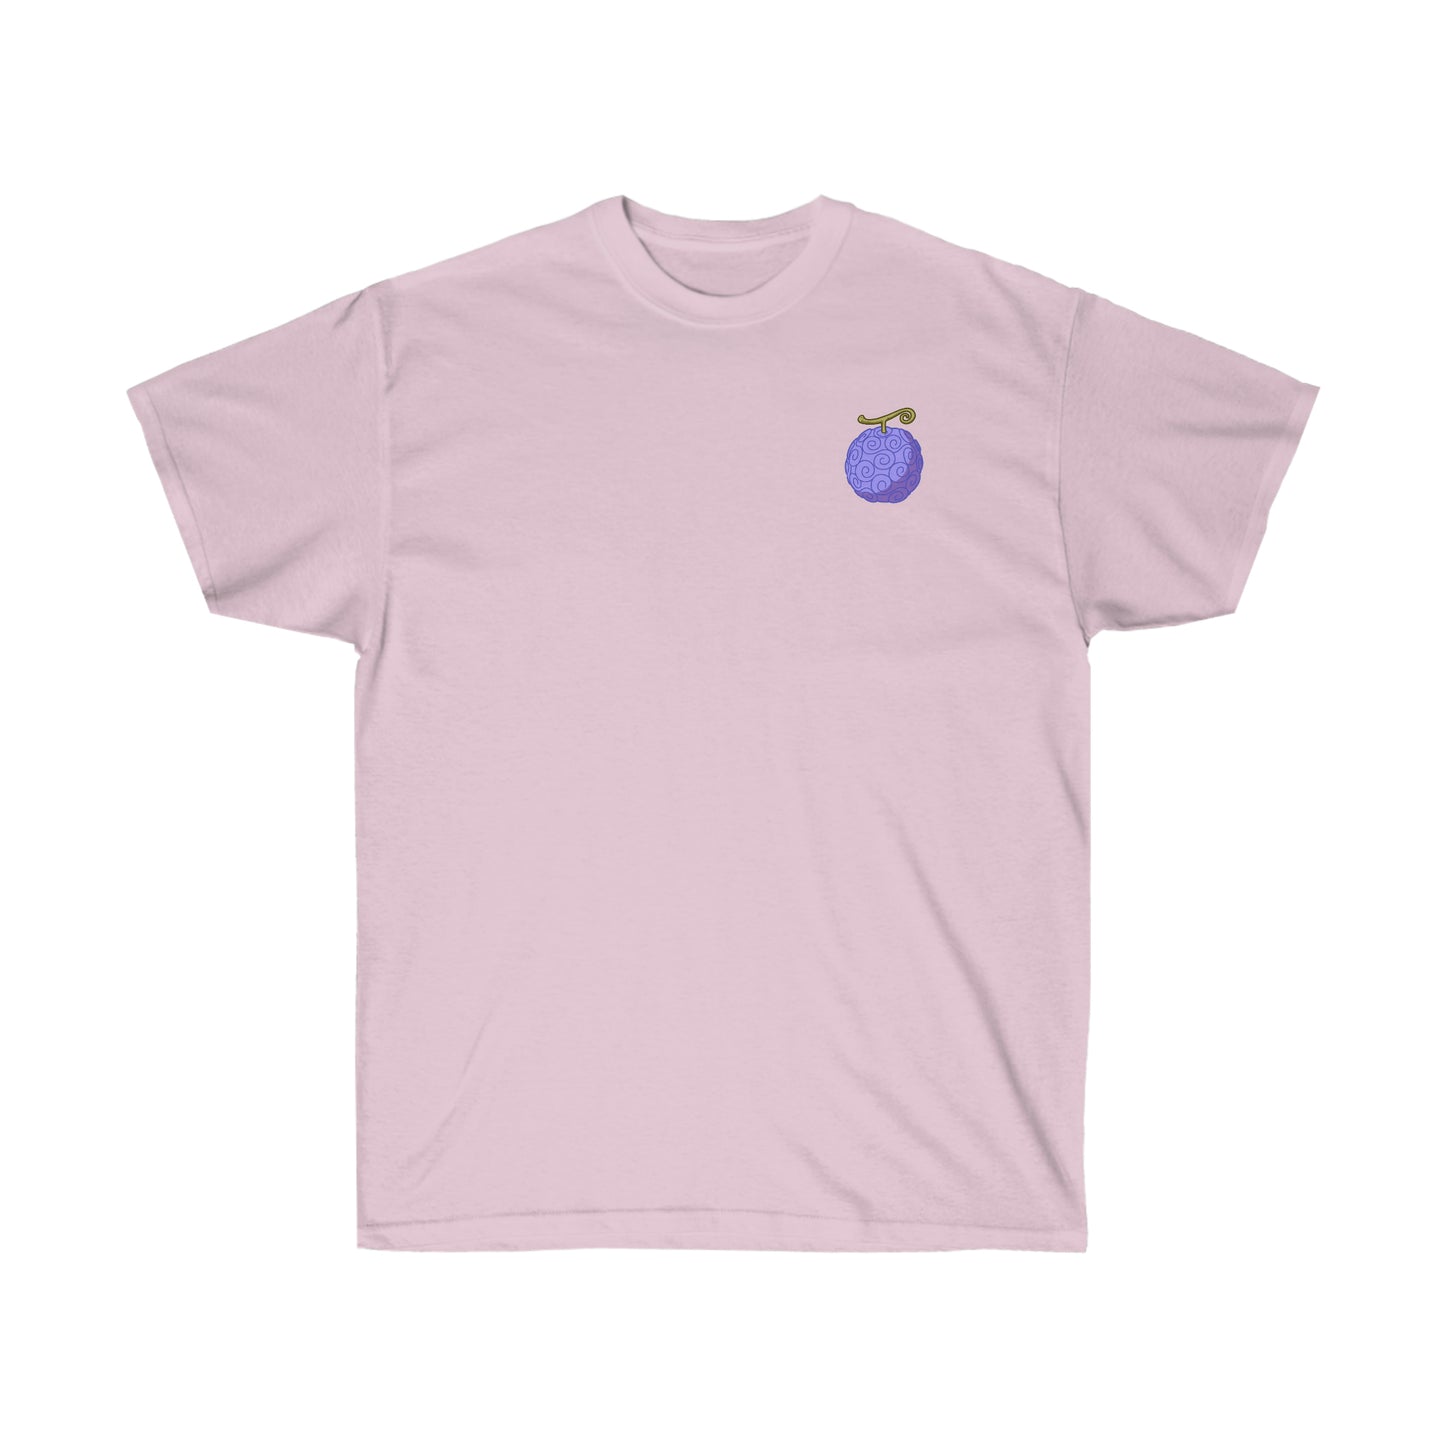 Purple Devil fruits shirt Subtle Anime Clothing Unisex